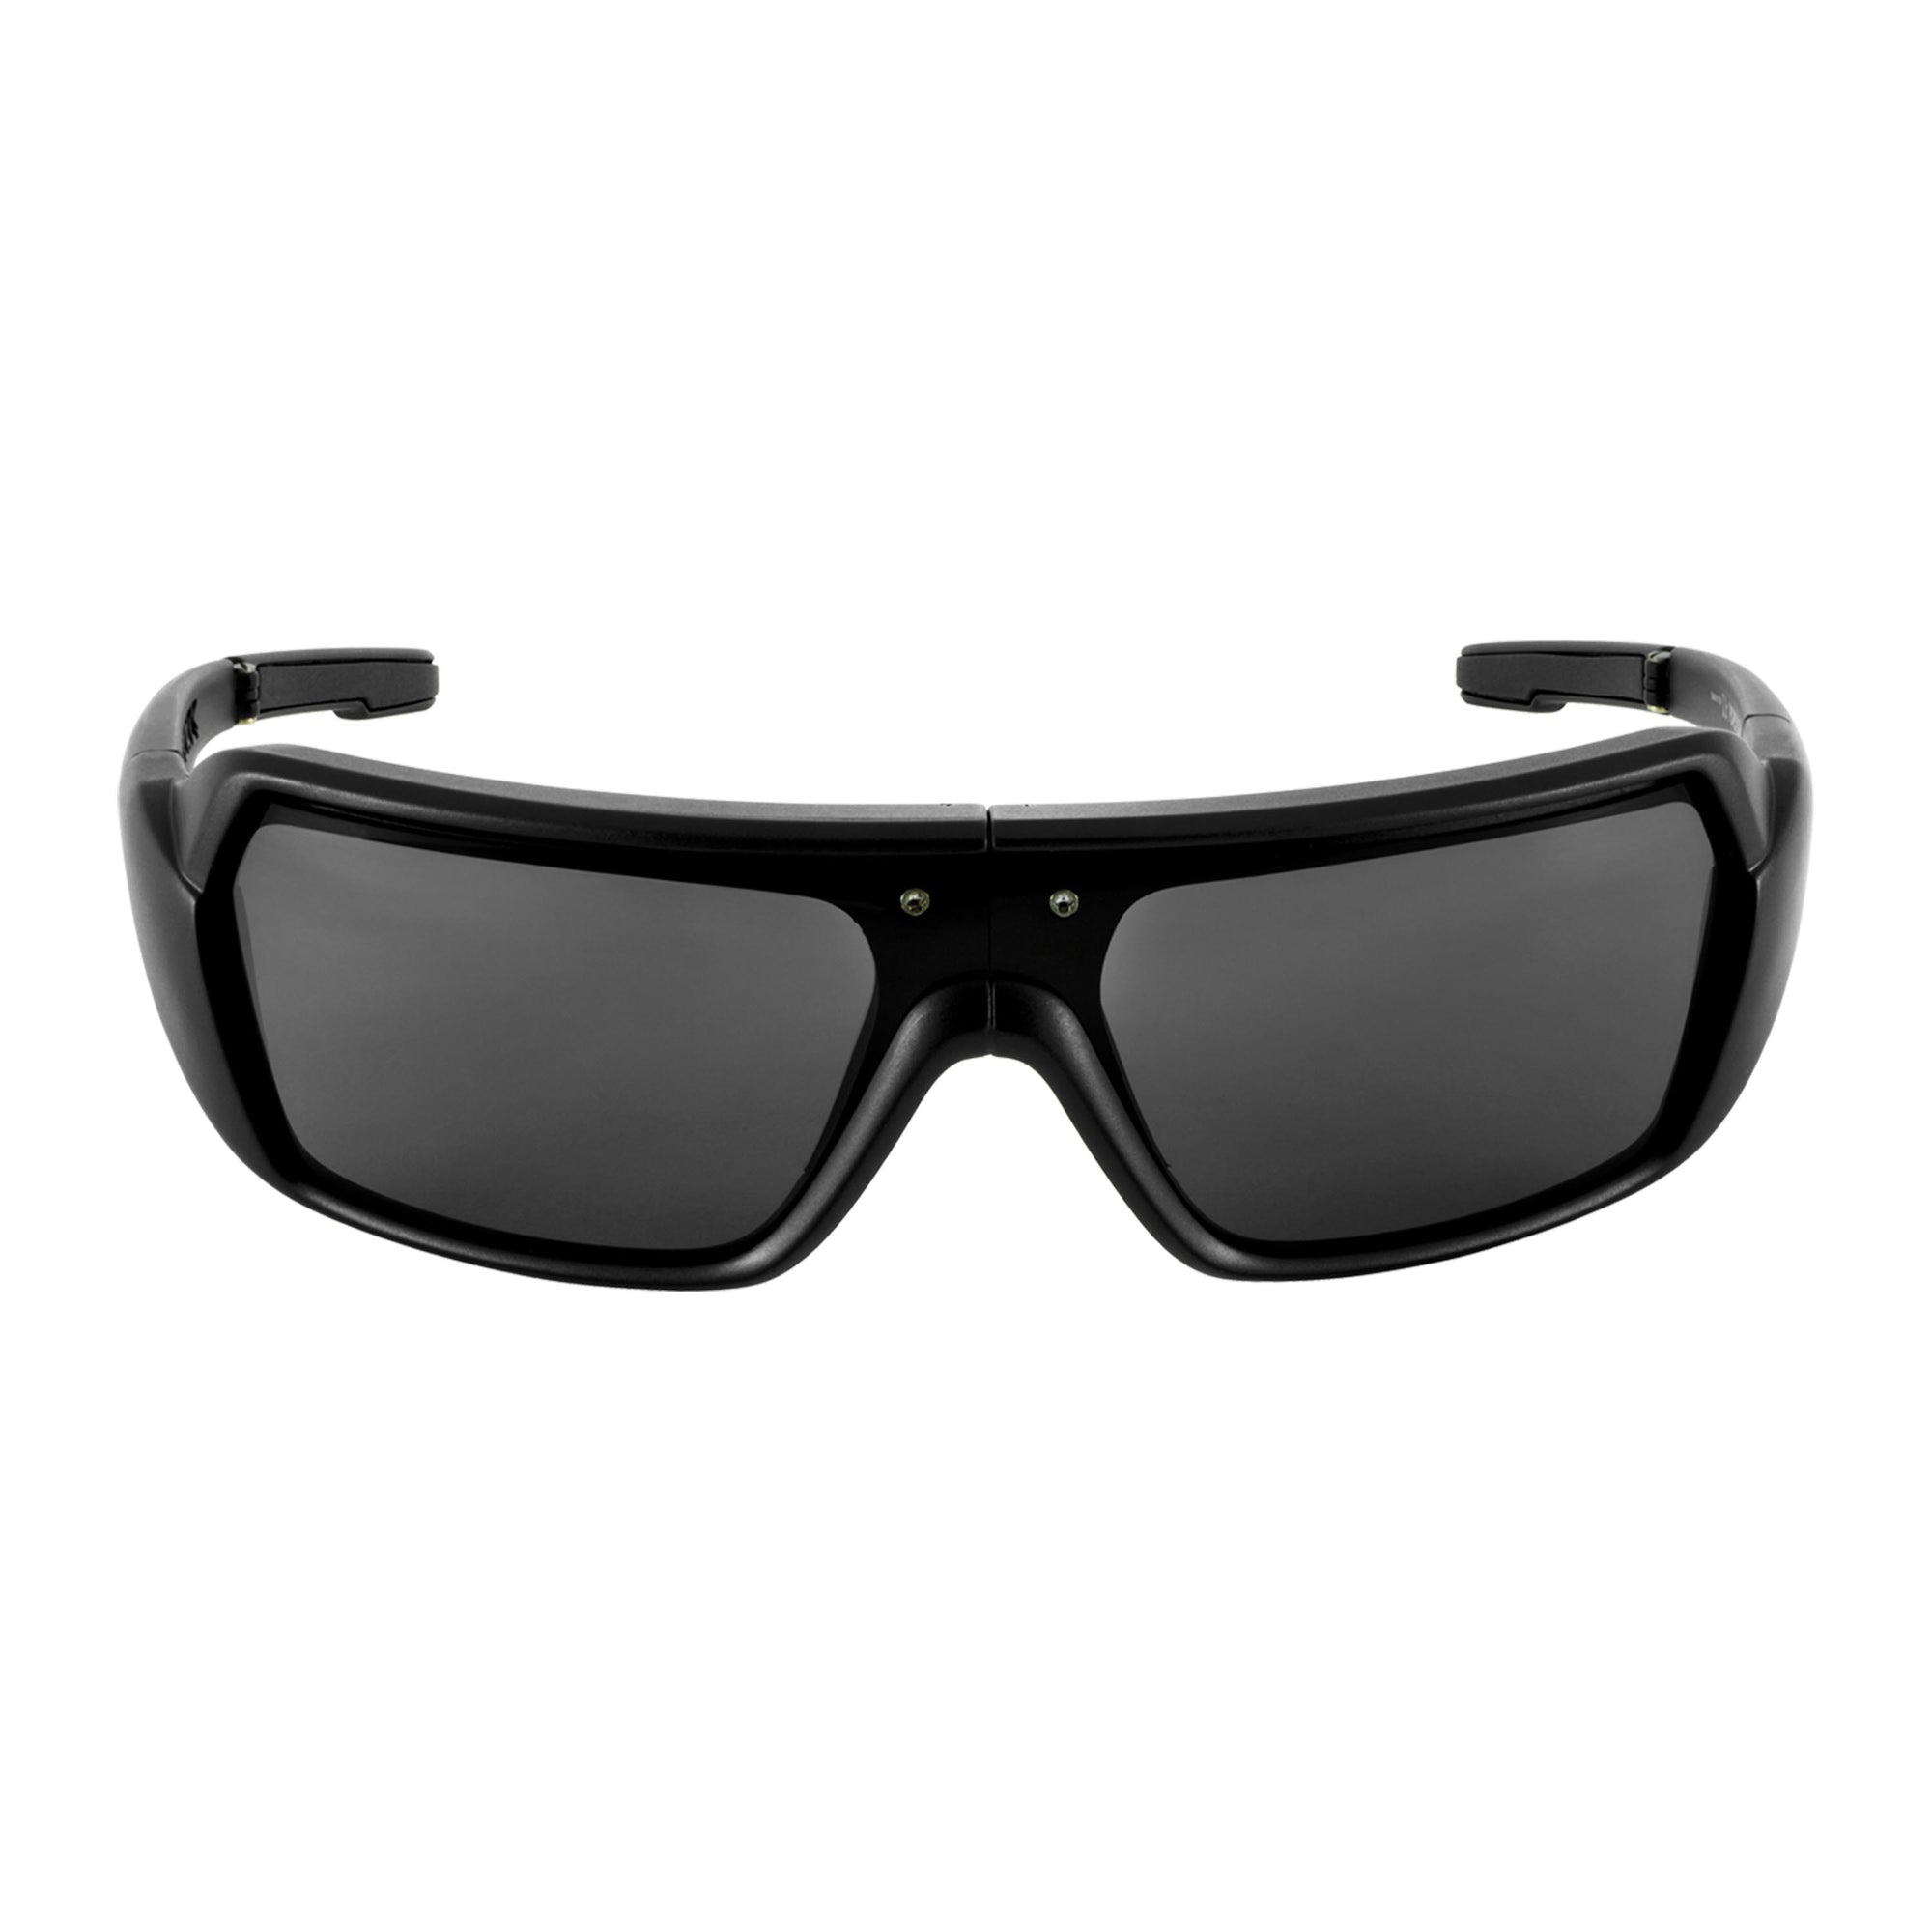 Popticals, Premium Compact Sunglasses, PopStorm, 010060-BMGP, Polarized Sunglasses, Matte Black Frame, Gray Lenses, Glam View